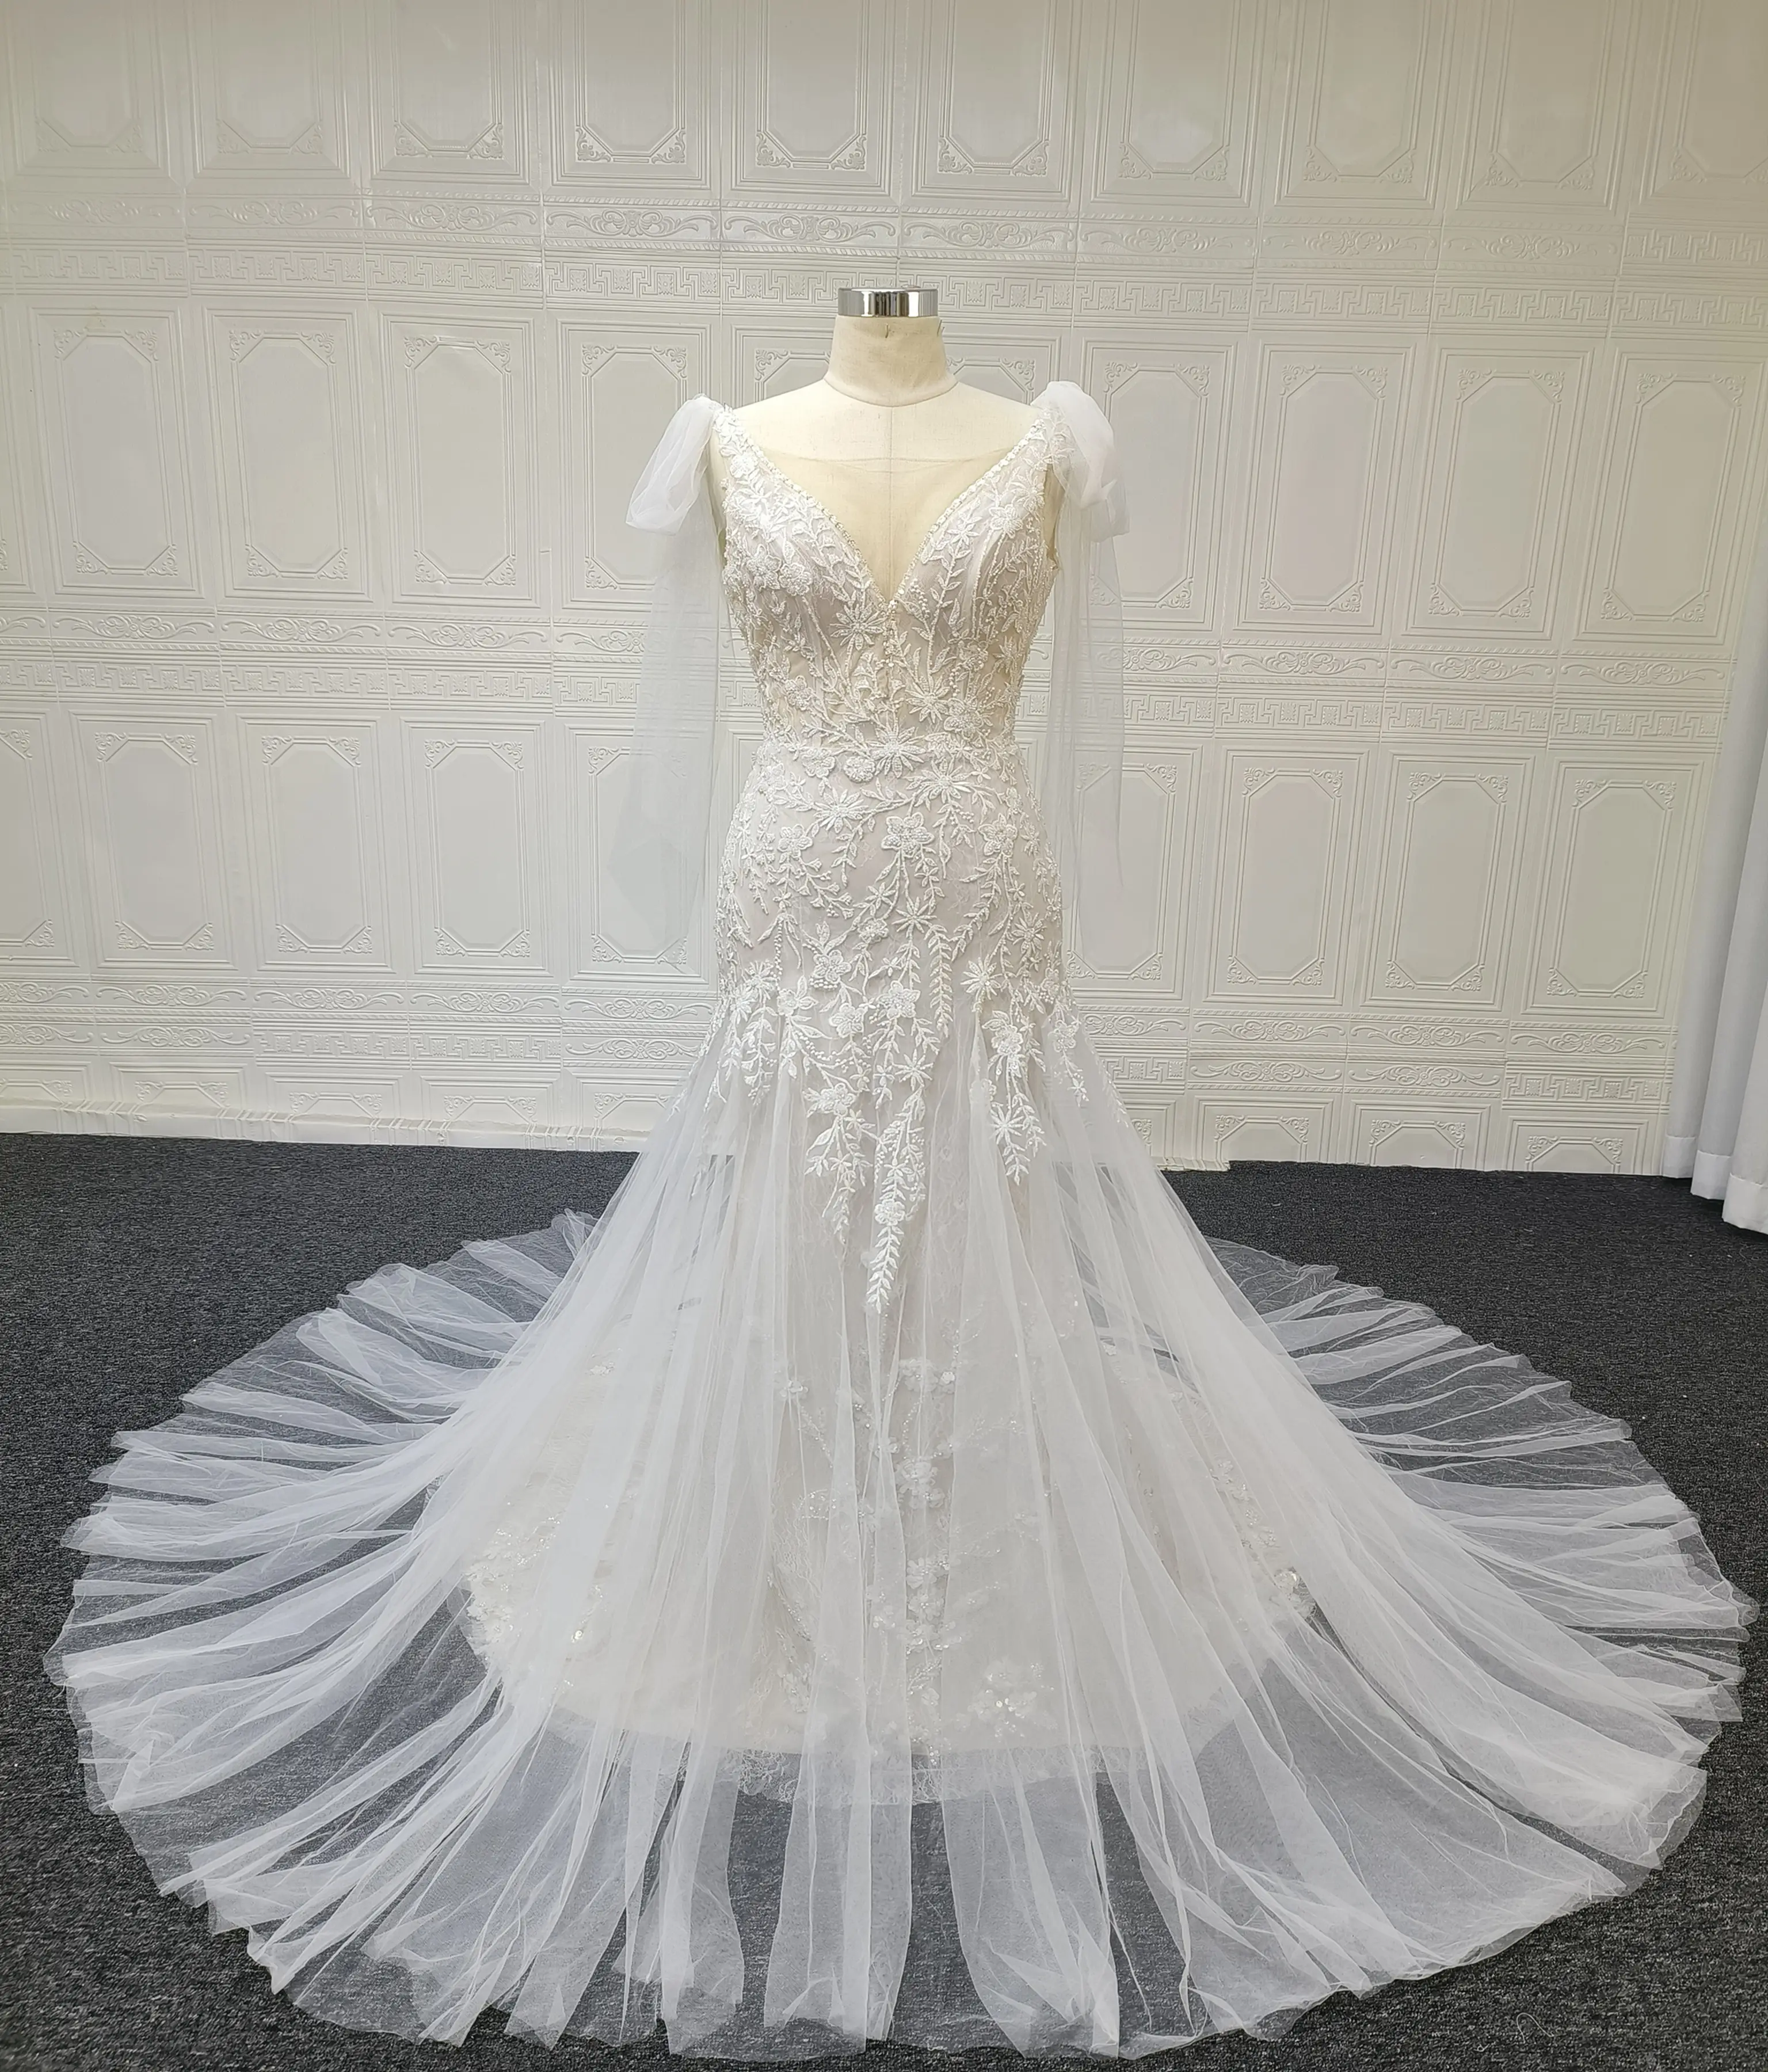 Gaun pengantin renda manik-manik bordir mewah kustom gaun pengantin tanpa punggung seksi gaun pernikahan V-neck dalam